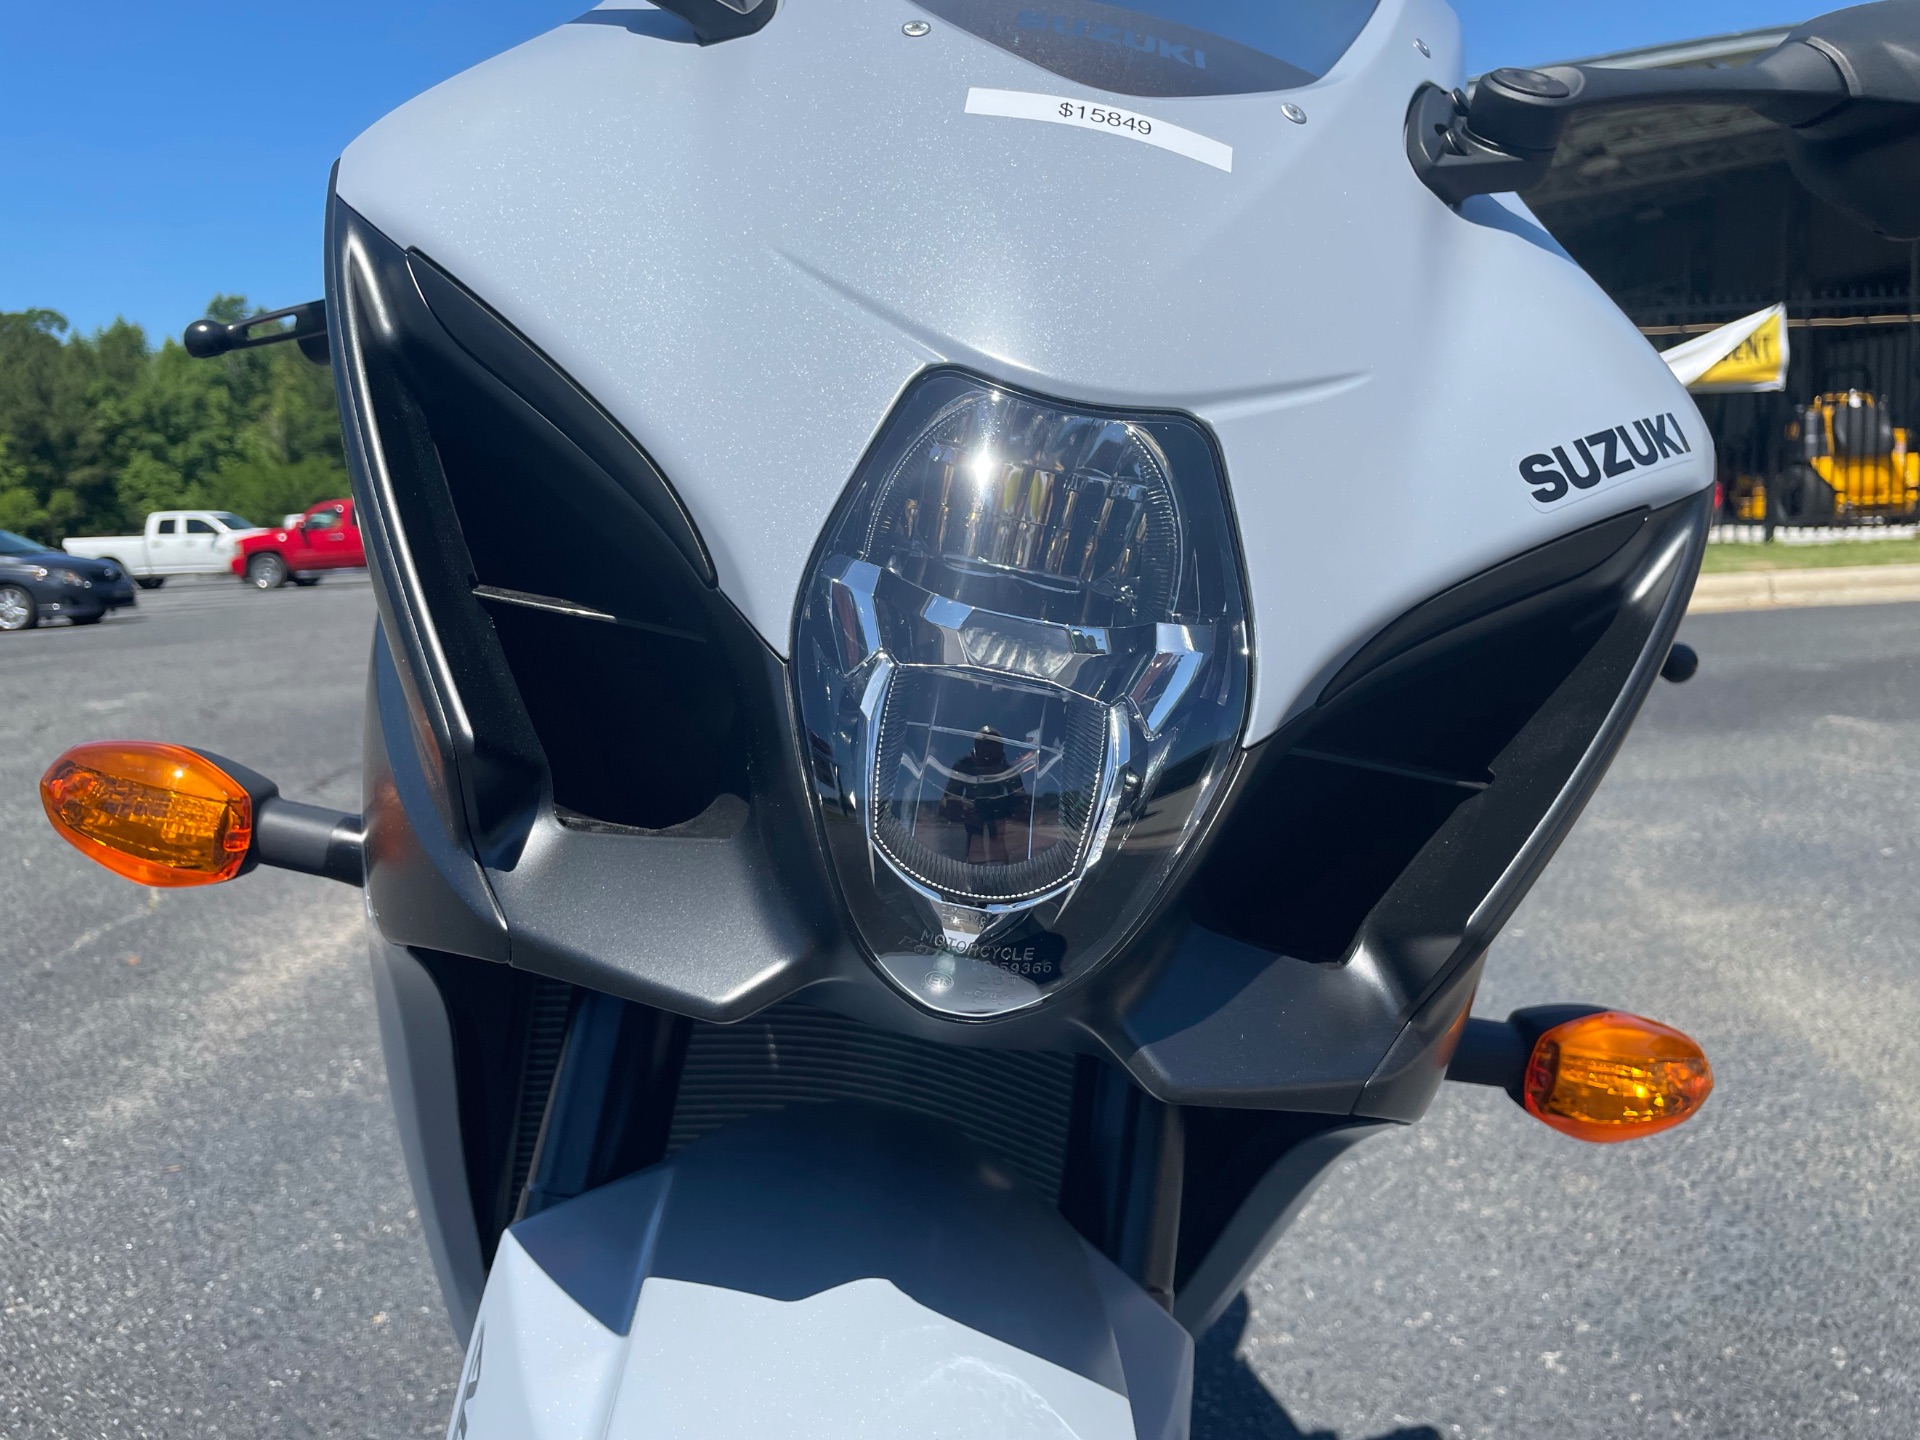 2022 Suzuki GSX-R1000R in Greenville, North Carolina - Photo 13